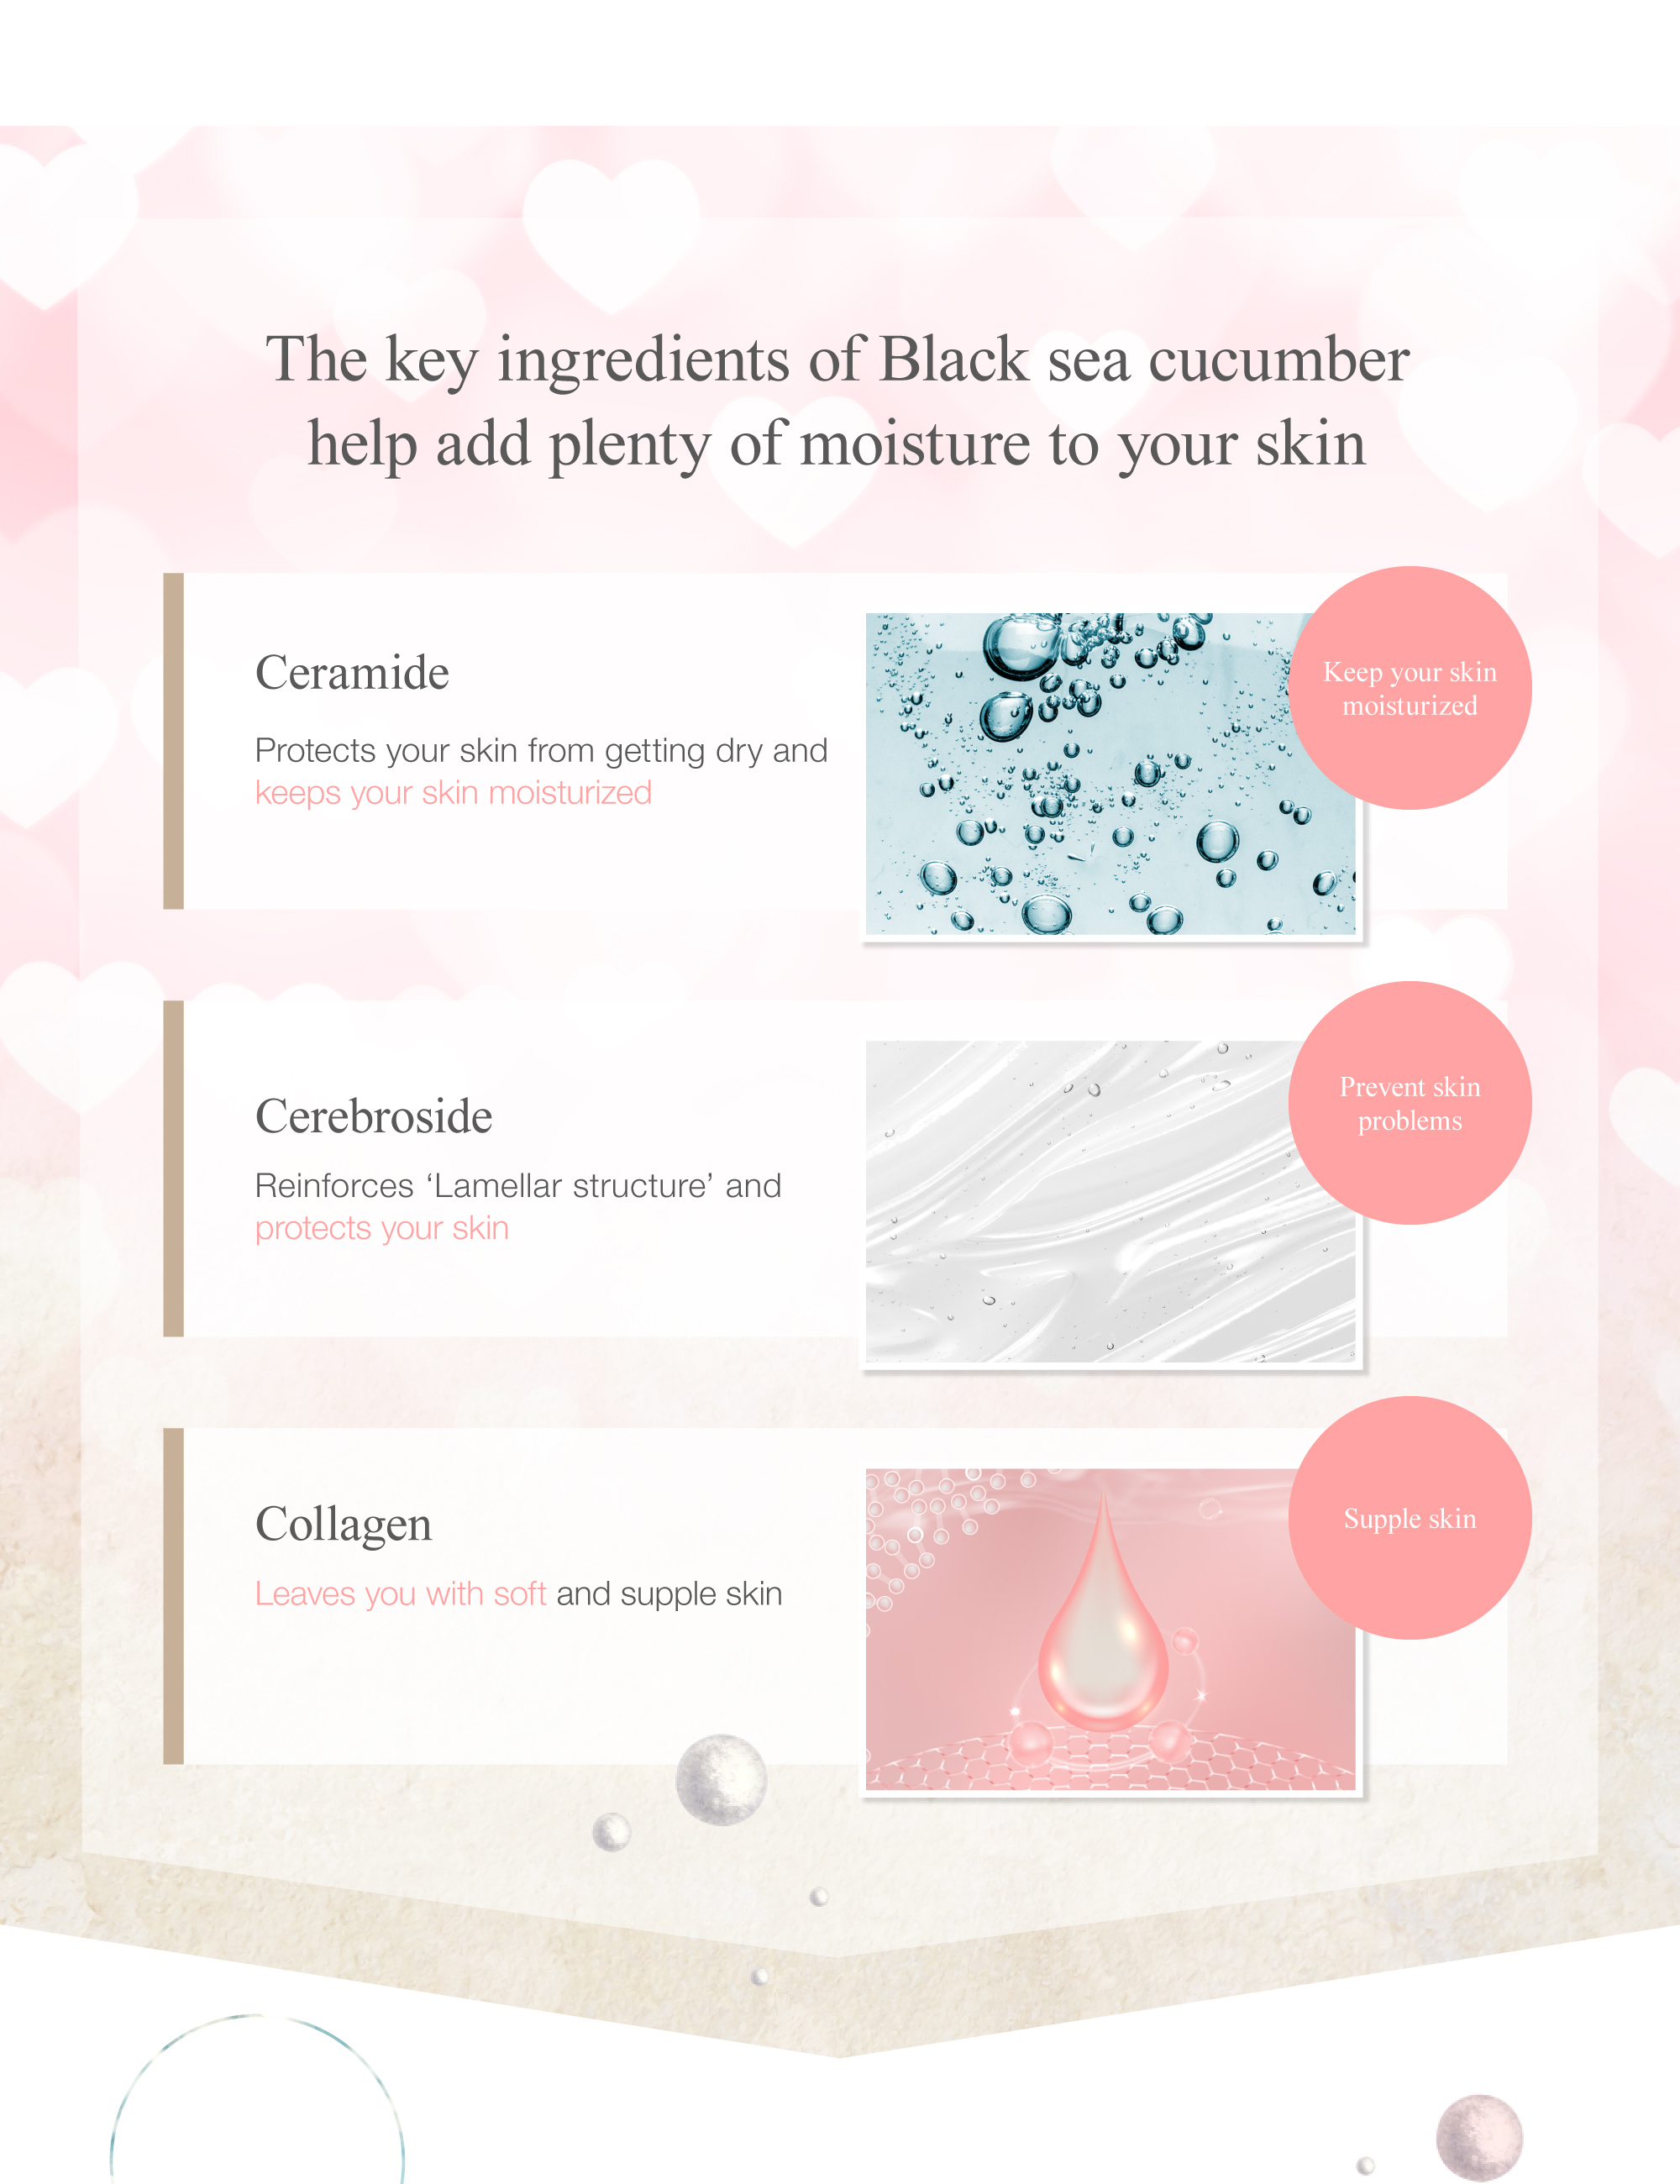 The key ingredients of Black sea cucumber help add plenty of moisture to your skin